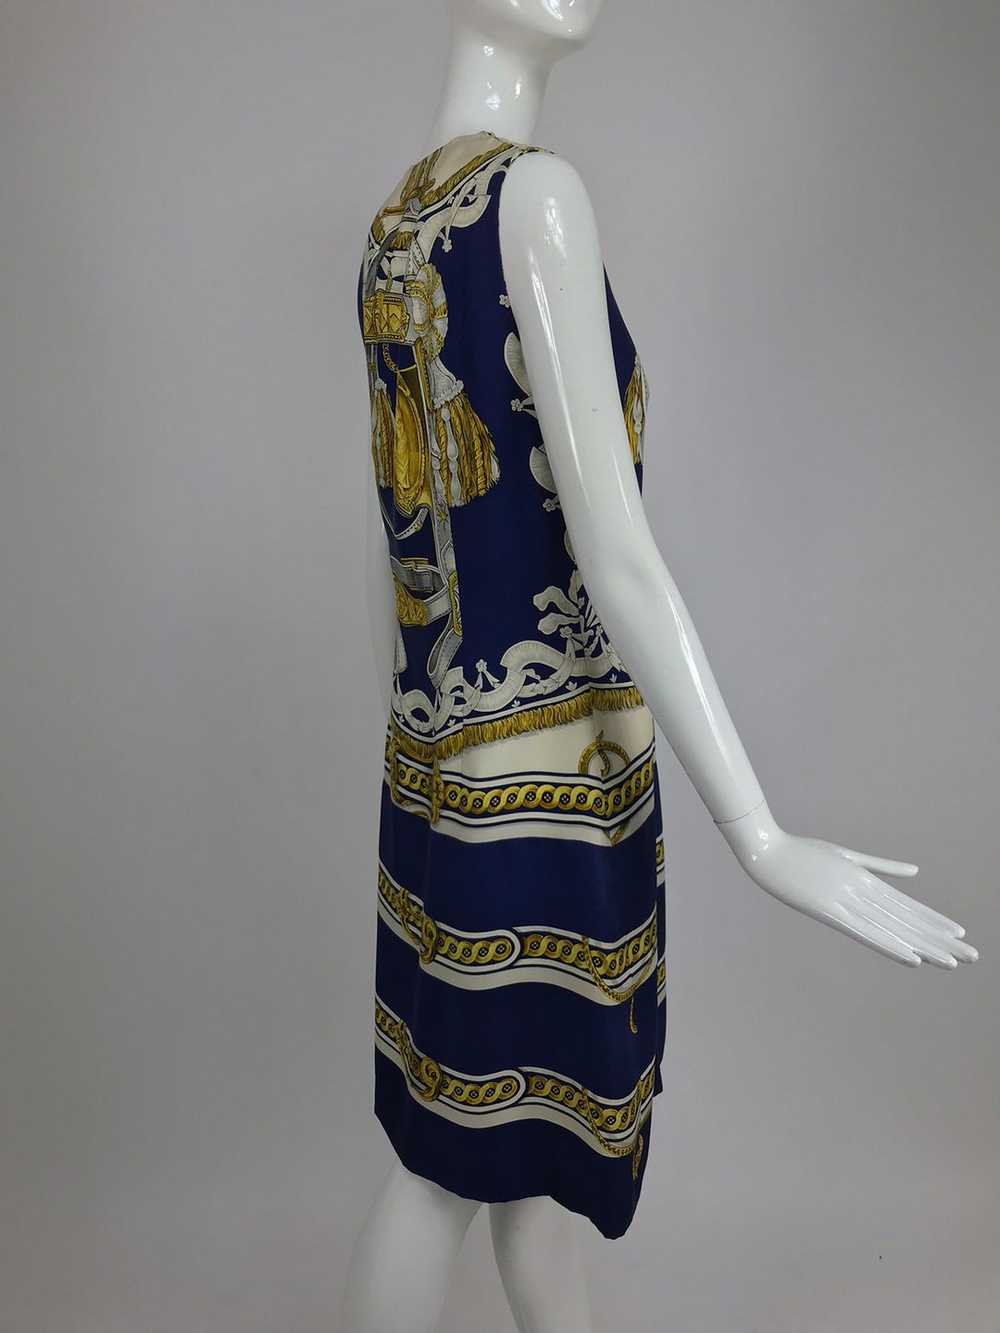 Hermes printed silk twill sheath dress 1970s 42 - image 5